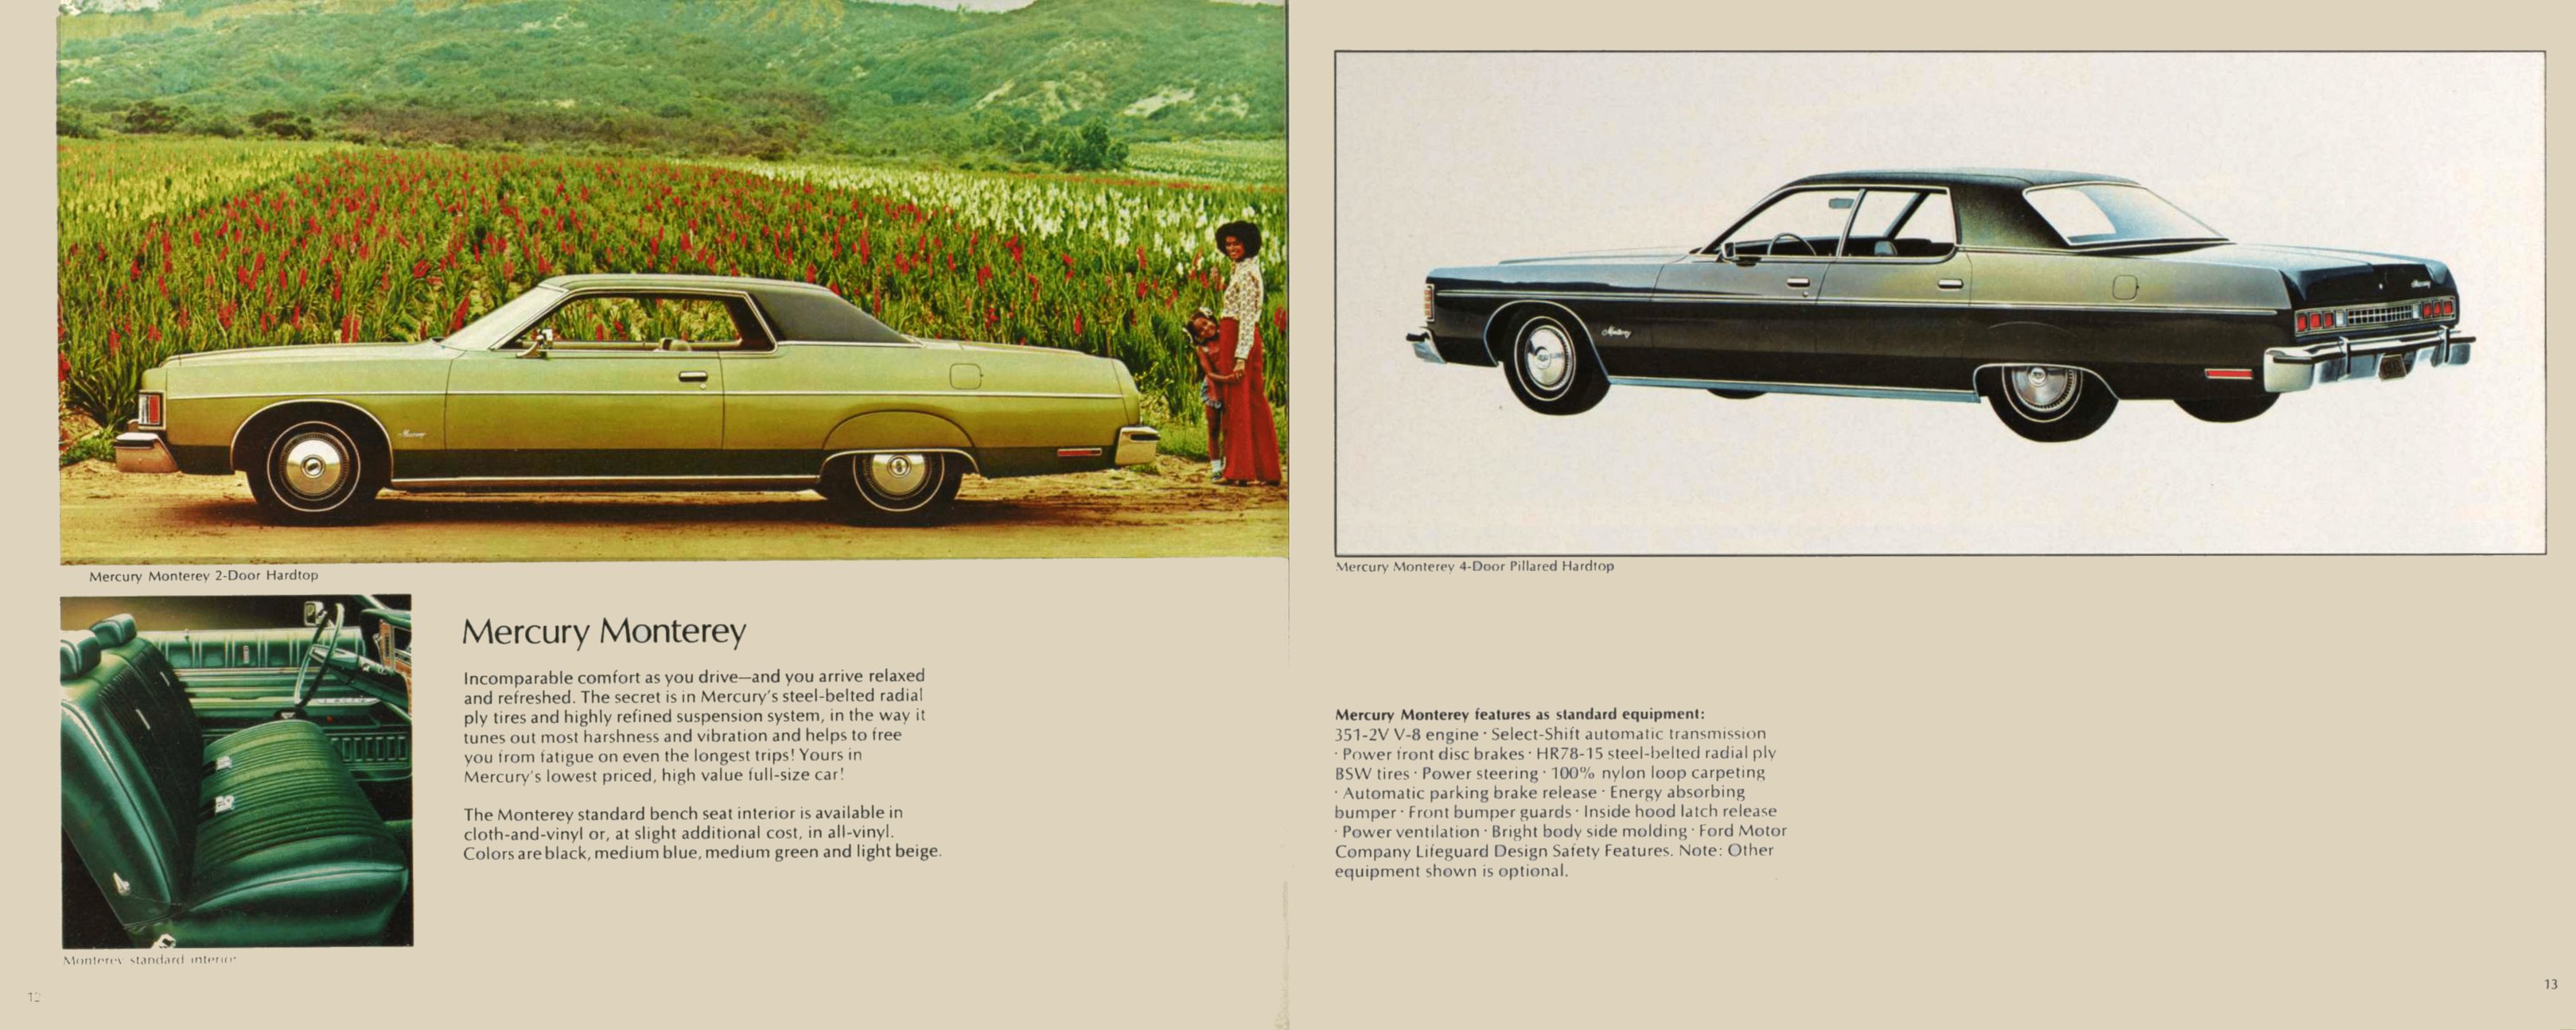 1973 Lincoln Mercury Full Line Brochure 12-13